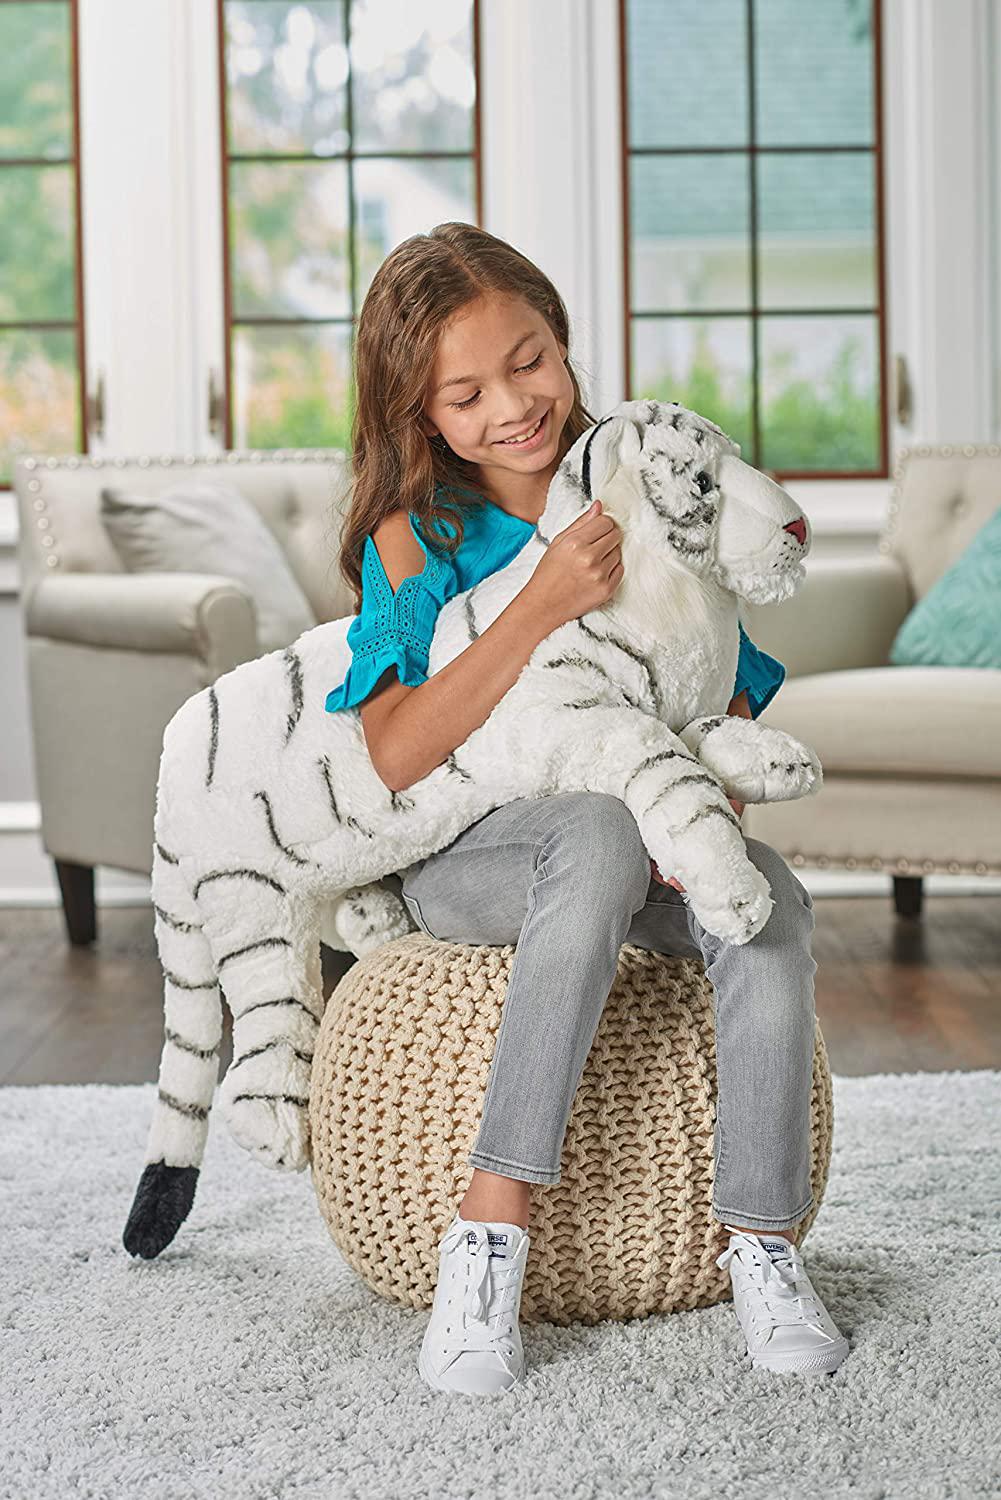 Wild Republic Jumbo White Tiger Plush, Giant Stuffed Animal, Plush Toy, Gifts for Kids, 30"